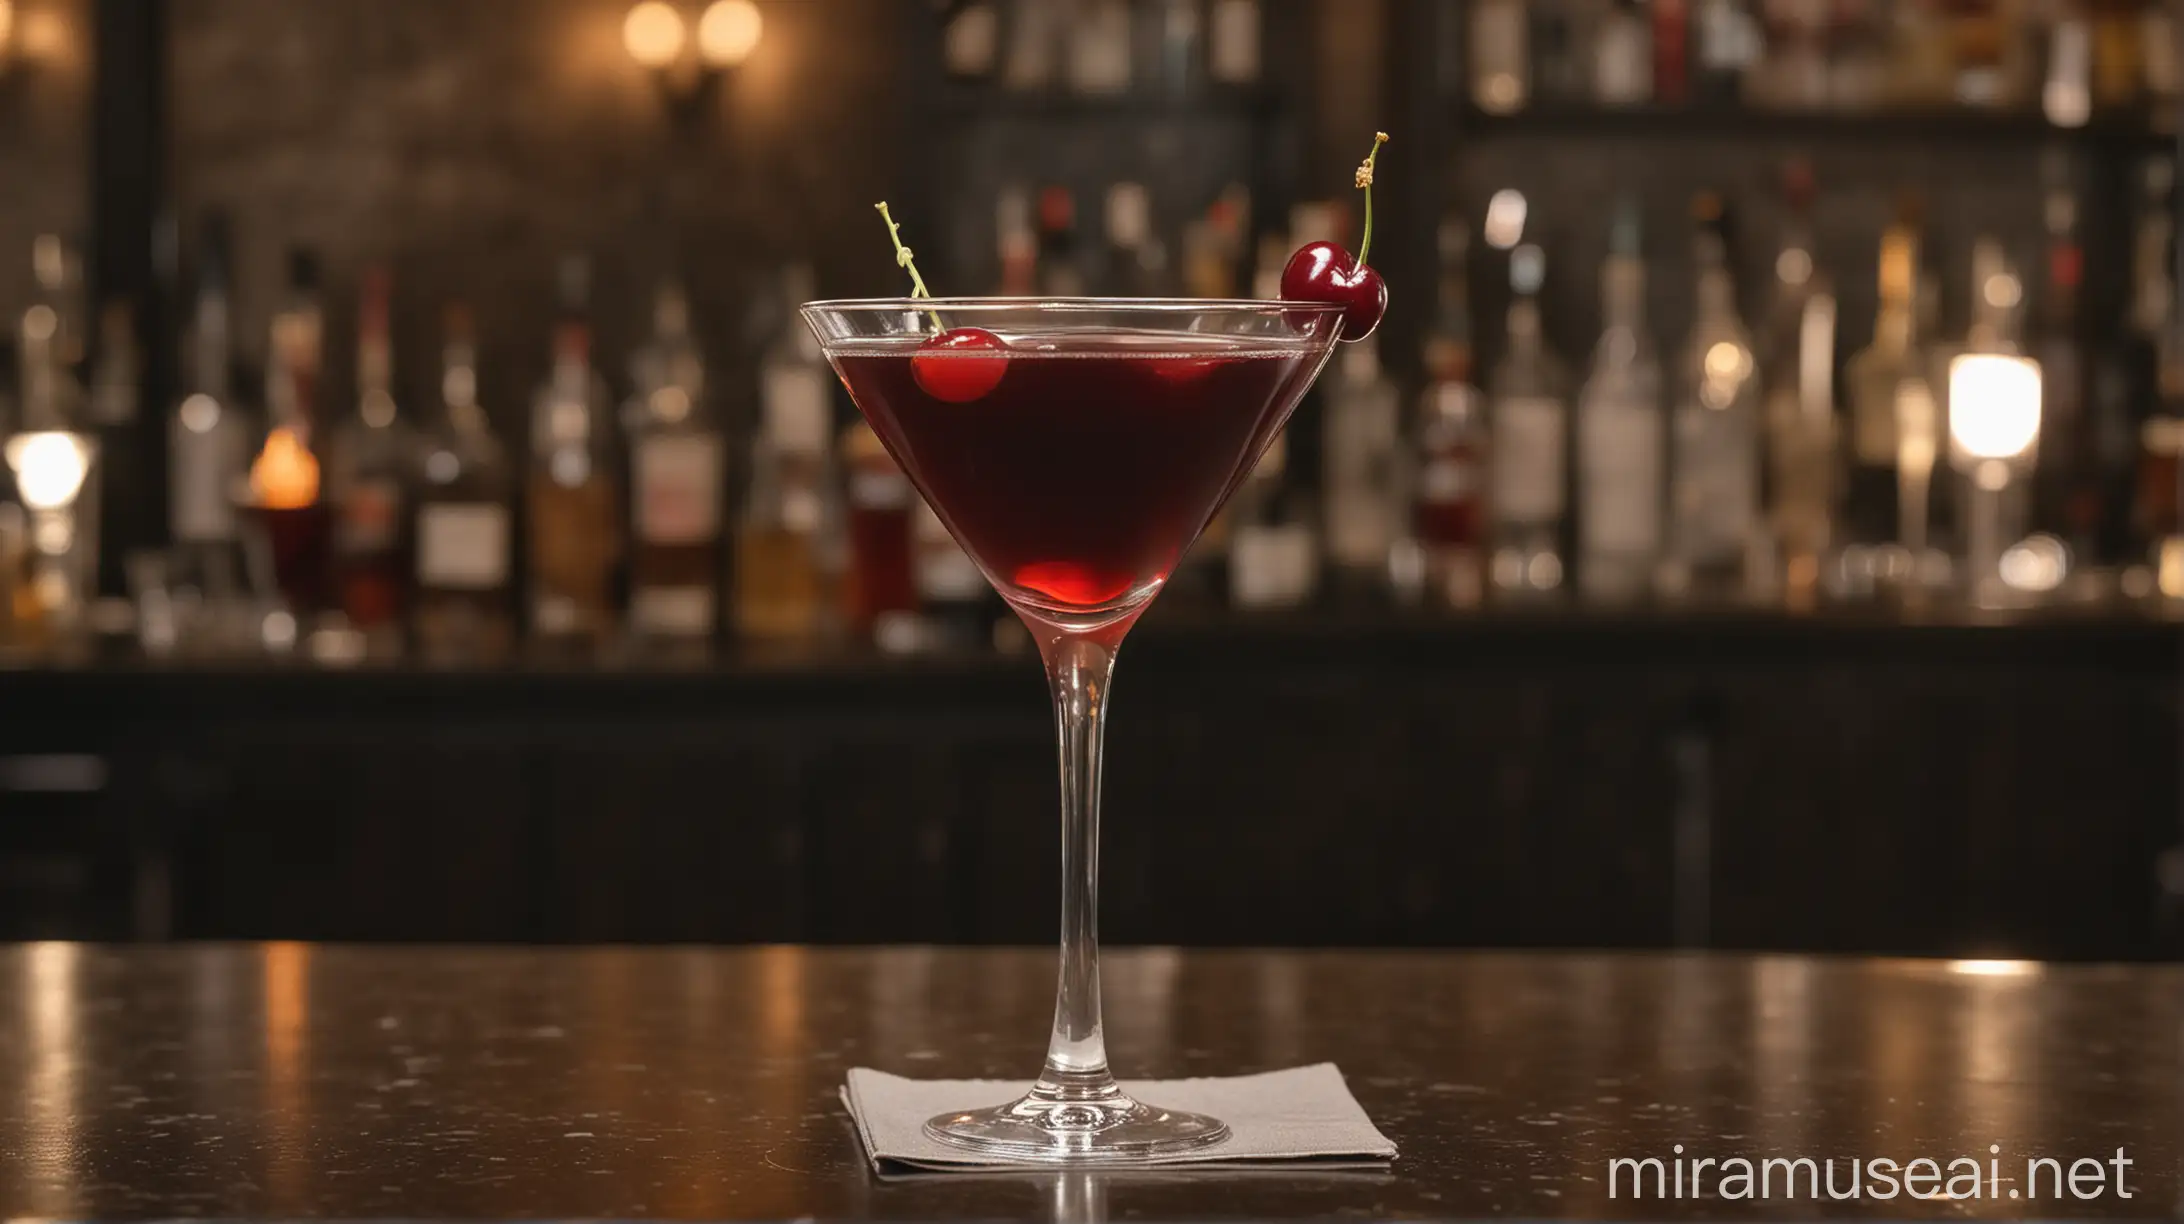 Classic Manhattan Cocktail with Cherry Garnish at Dark Drinks Bar